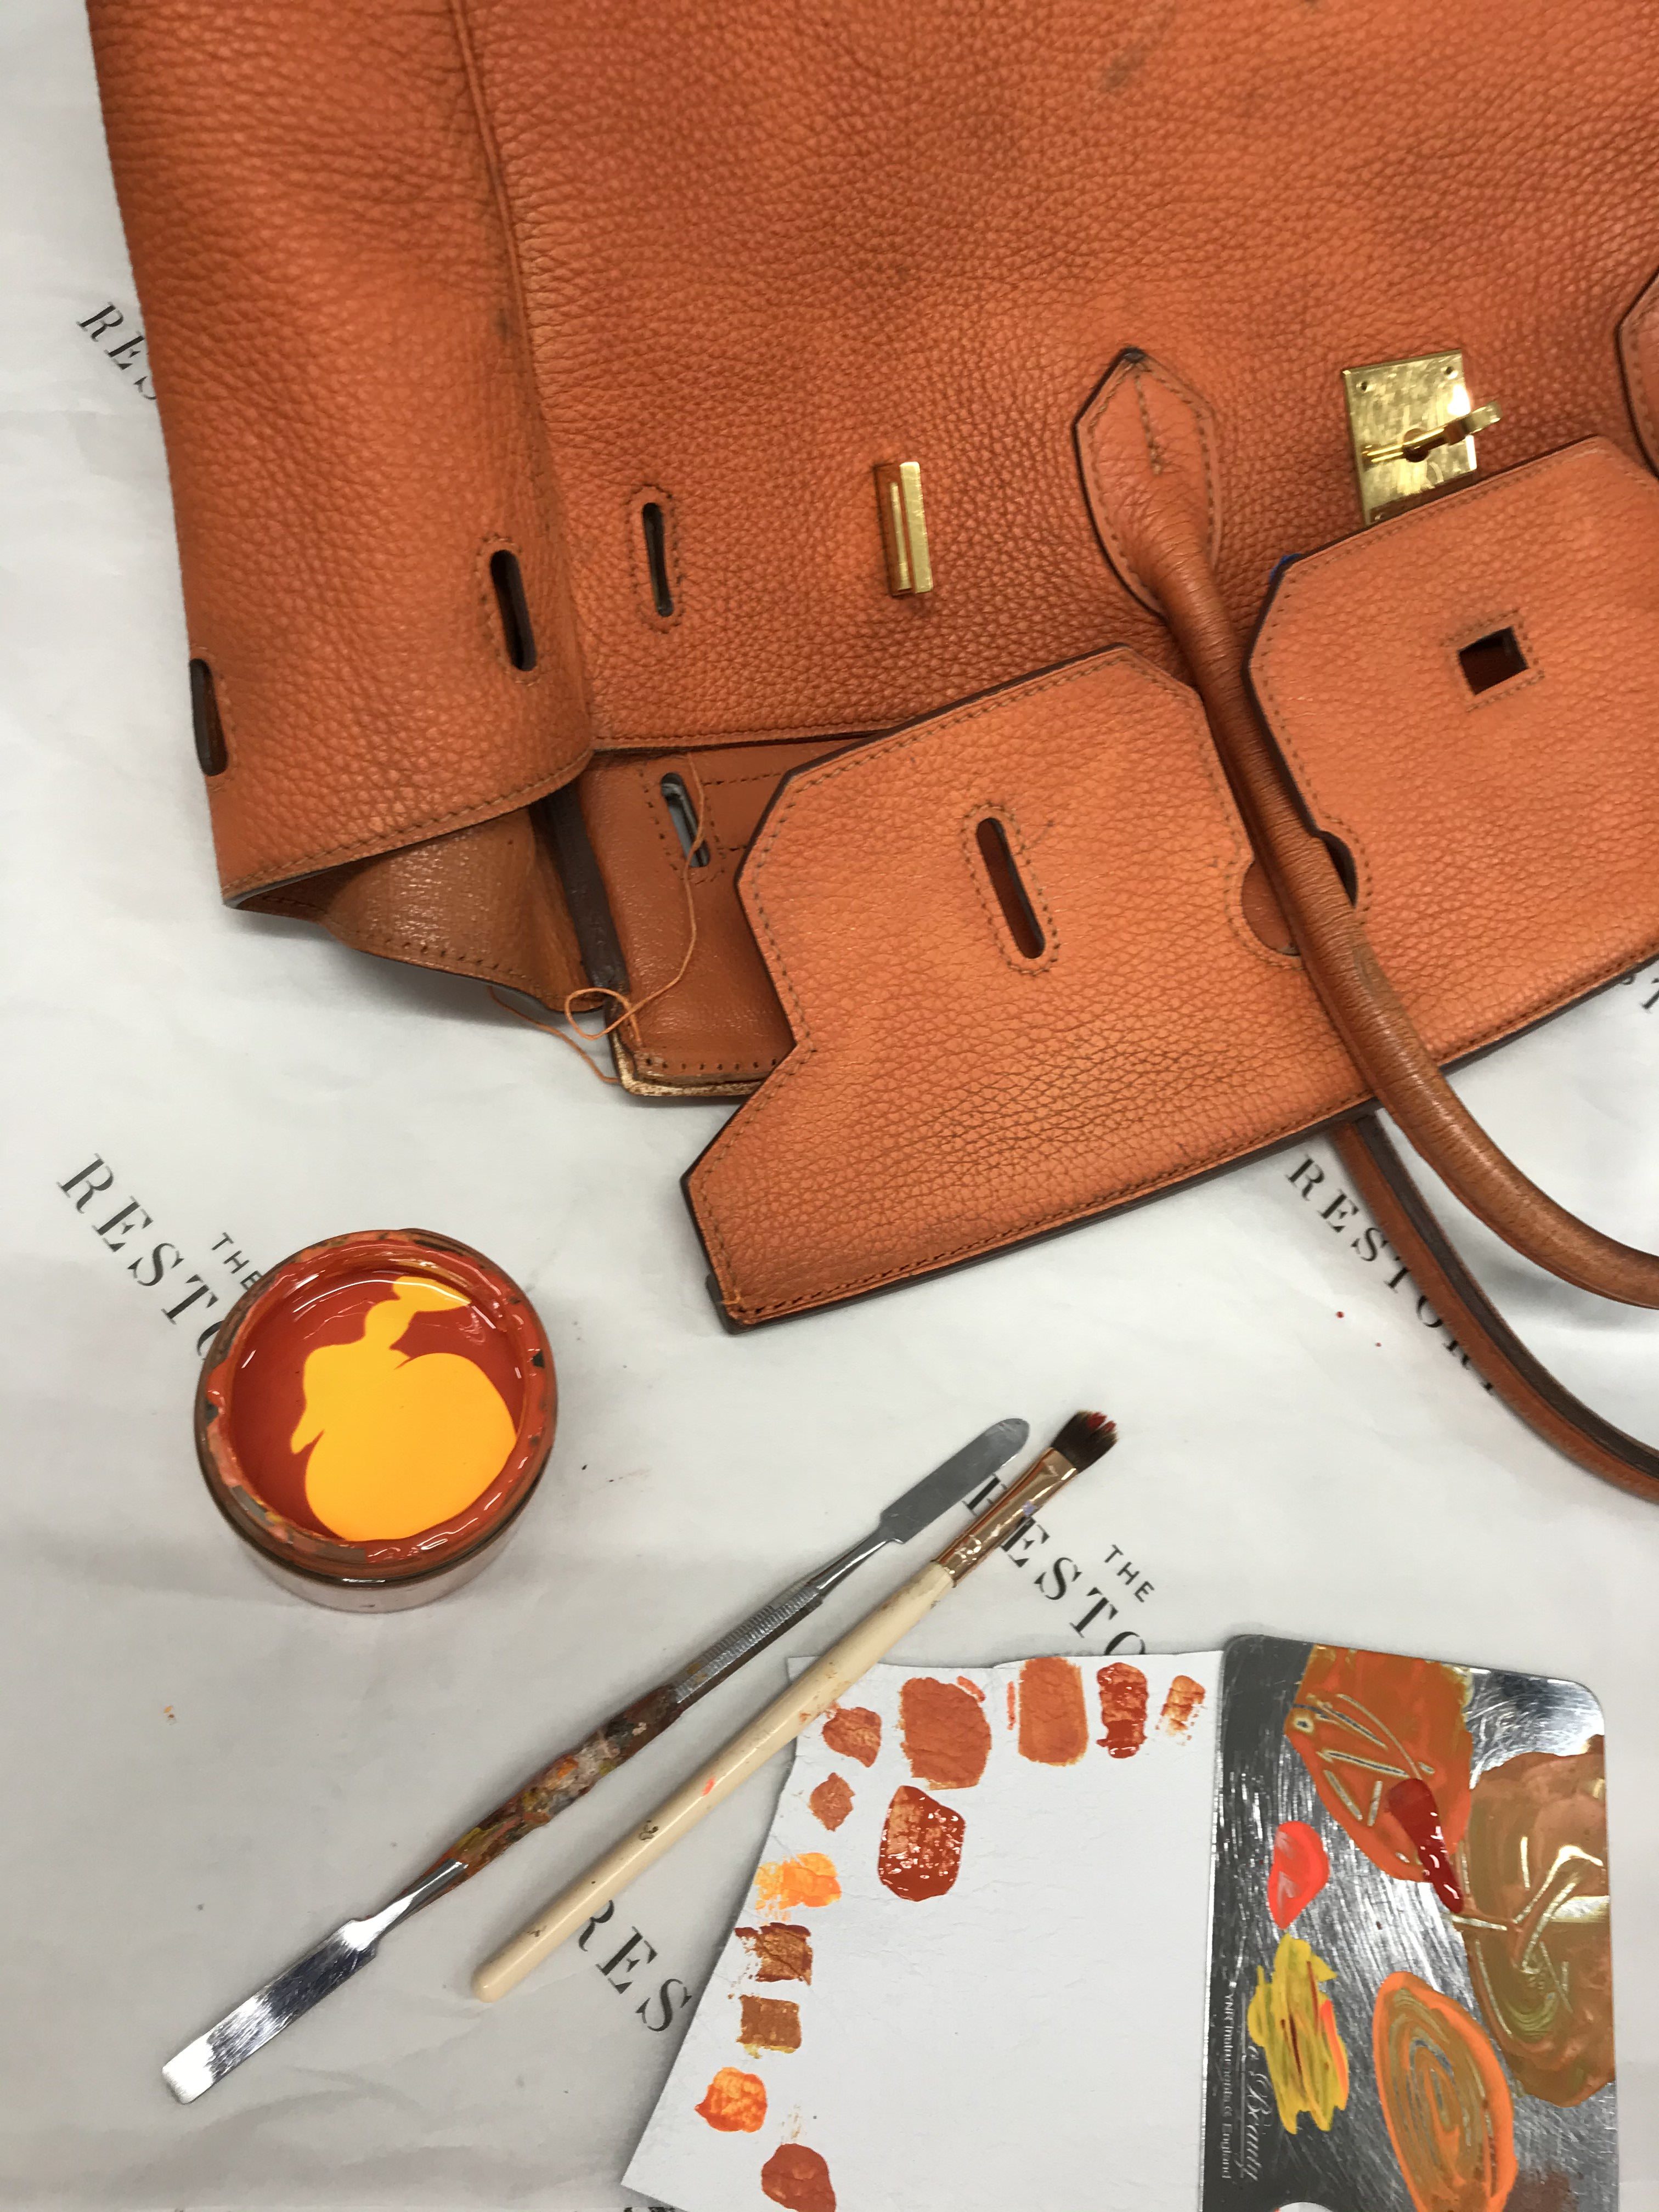 Hermès Birkin, But DIY? The Man Who Built the Handbag From Scratch